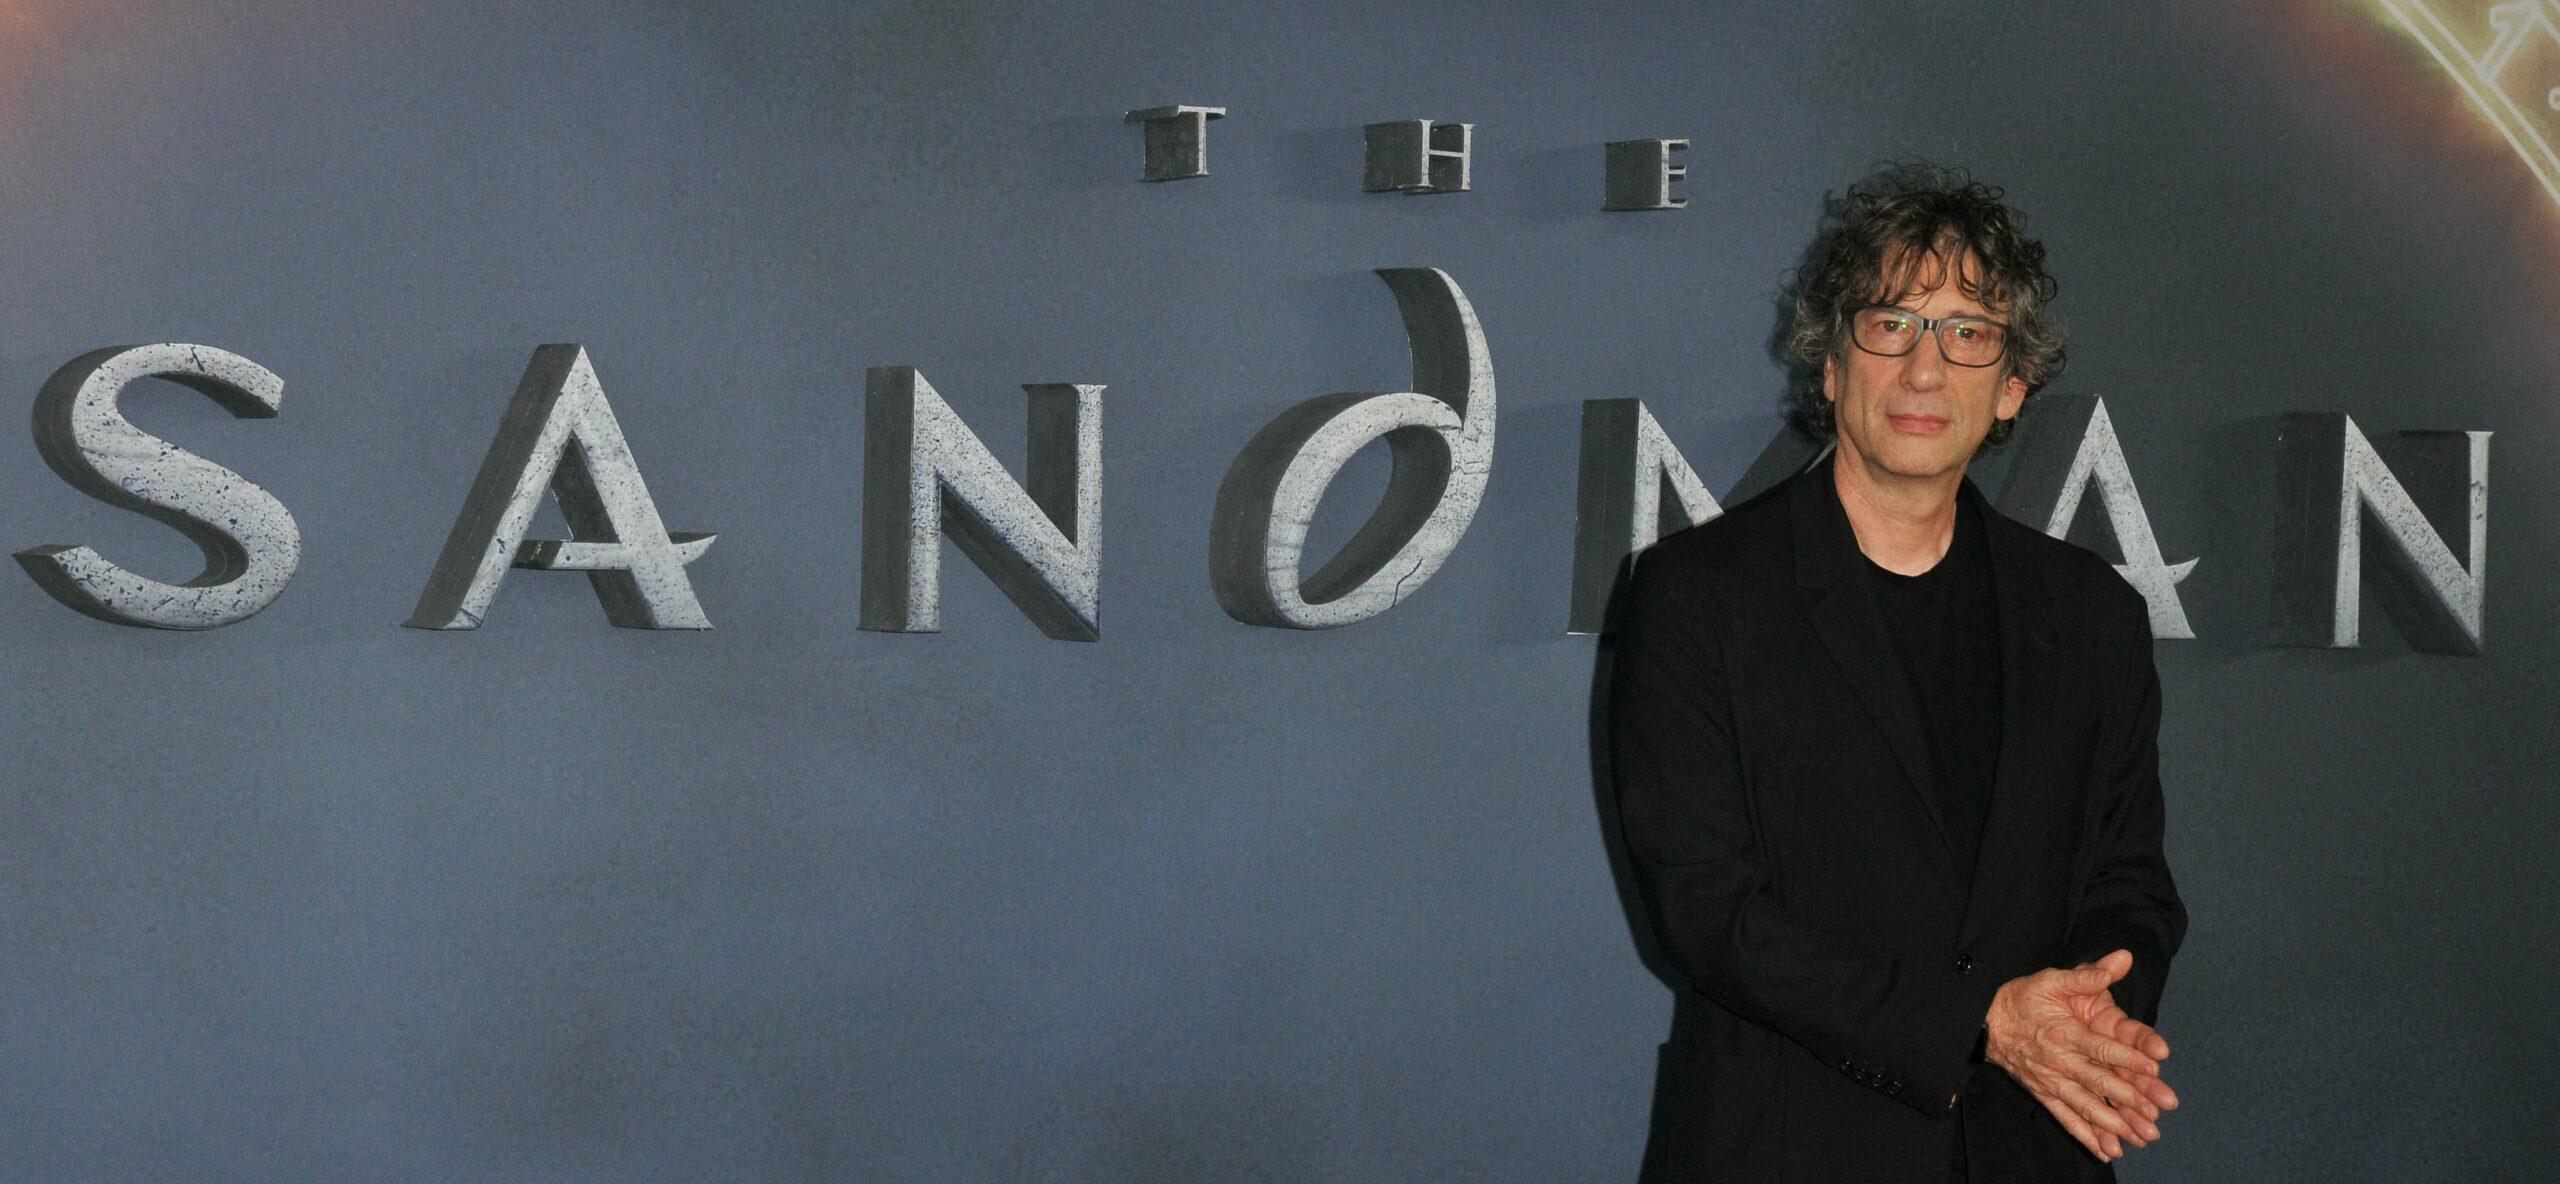 Neil Gaiman at The Sandman premiere